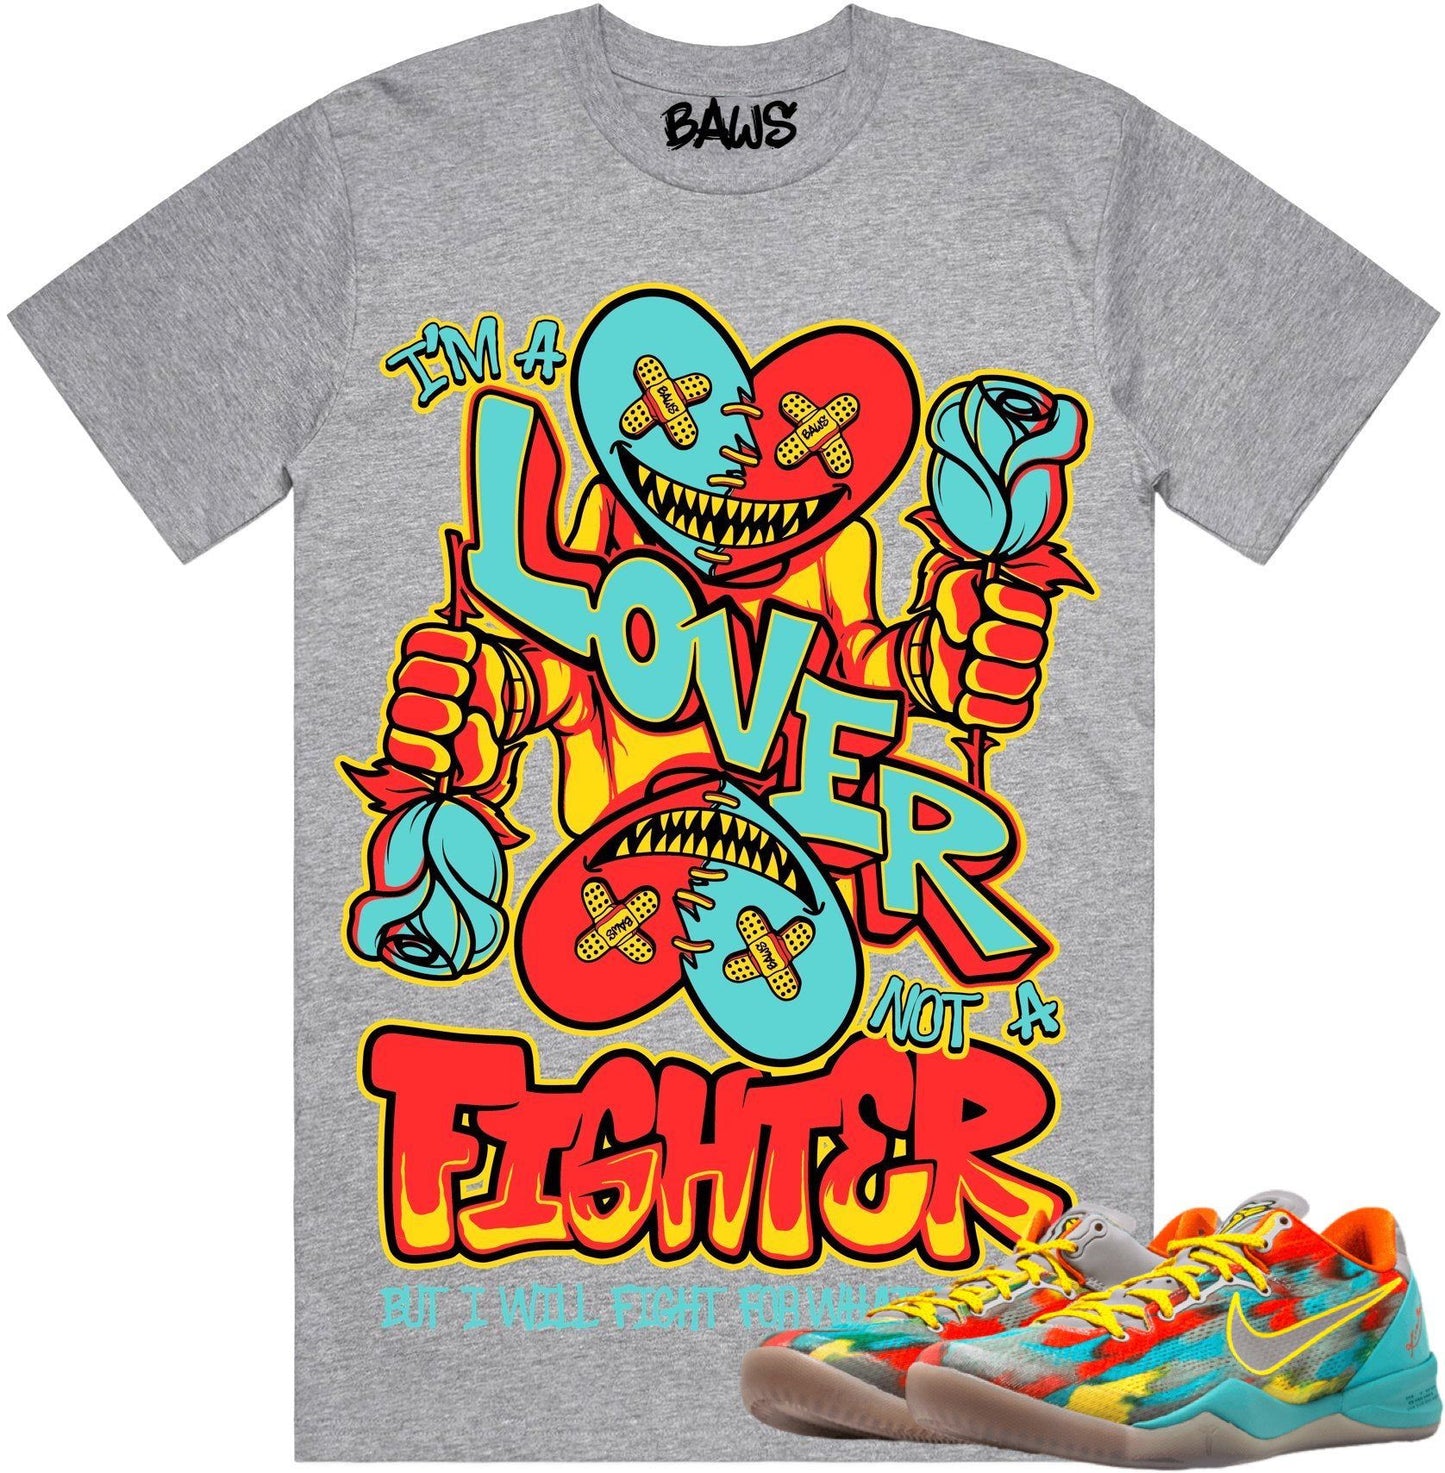 Kobe 8 Venice Beach Shirts - Venice 8s Sneaker Tees - Love Fighter